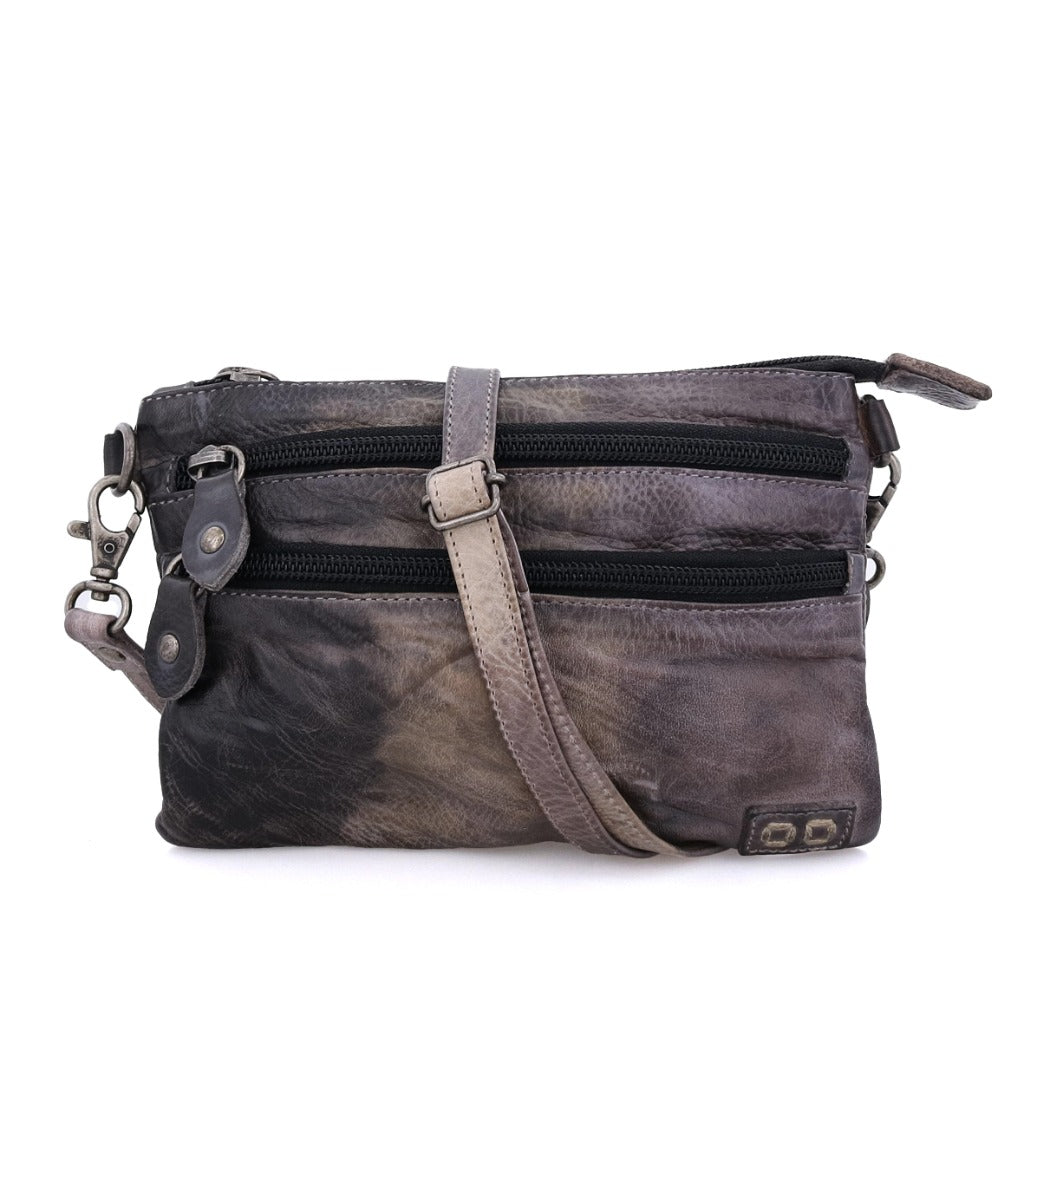 A Bed Stu Viana grey leather crossbody bag with a zipper.